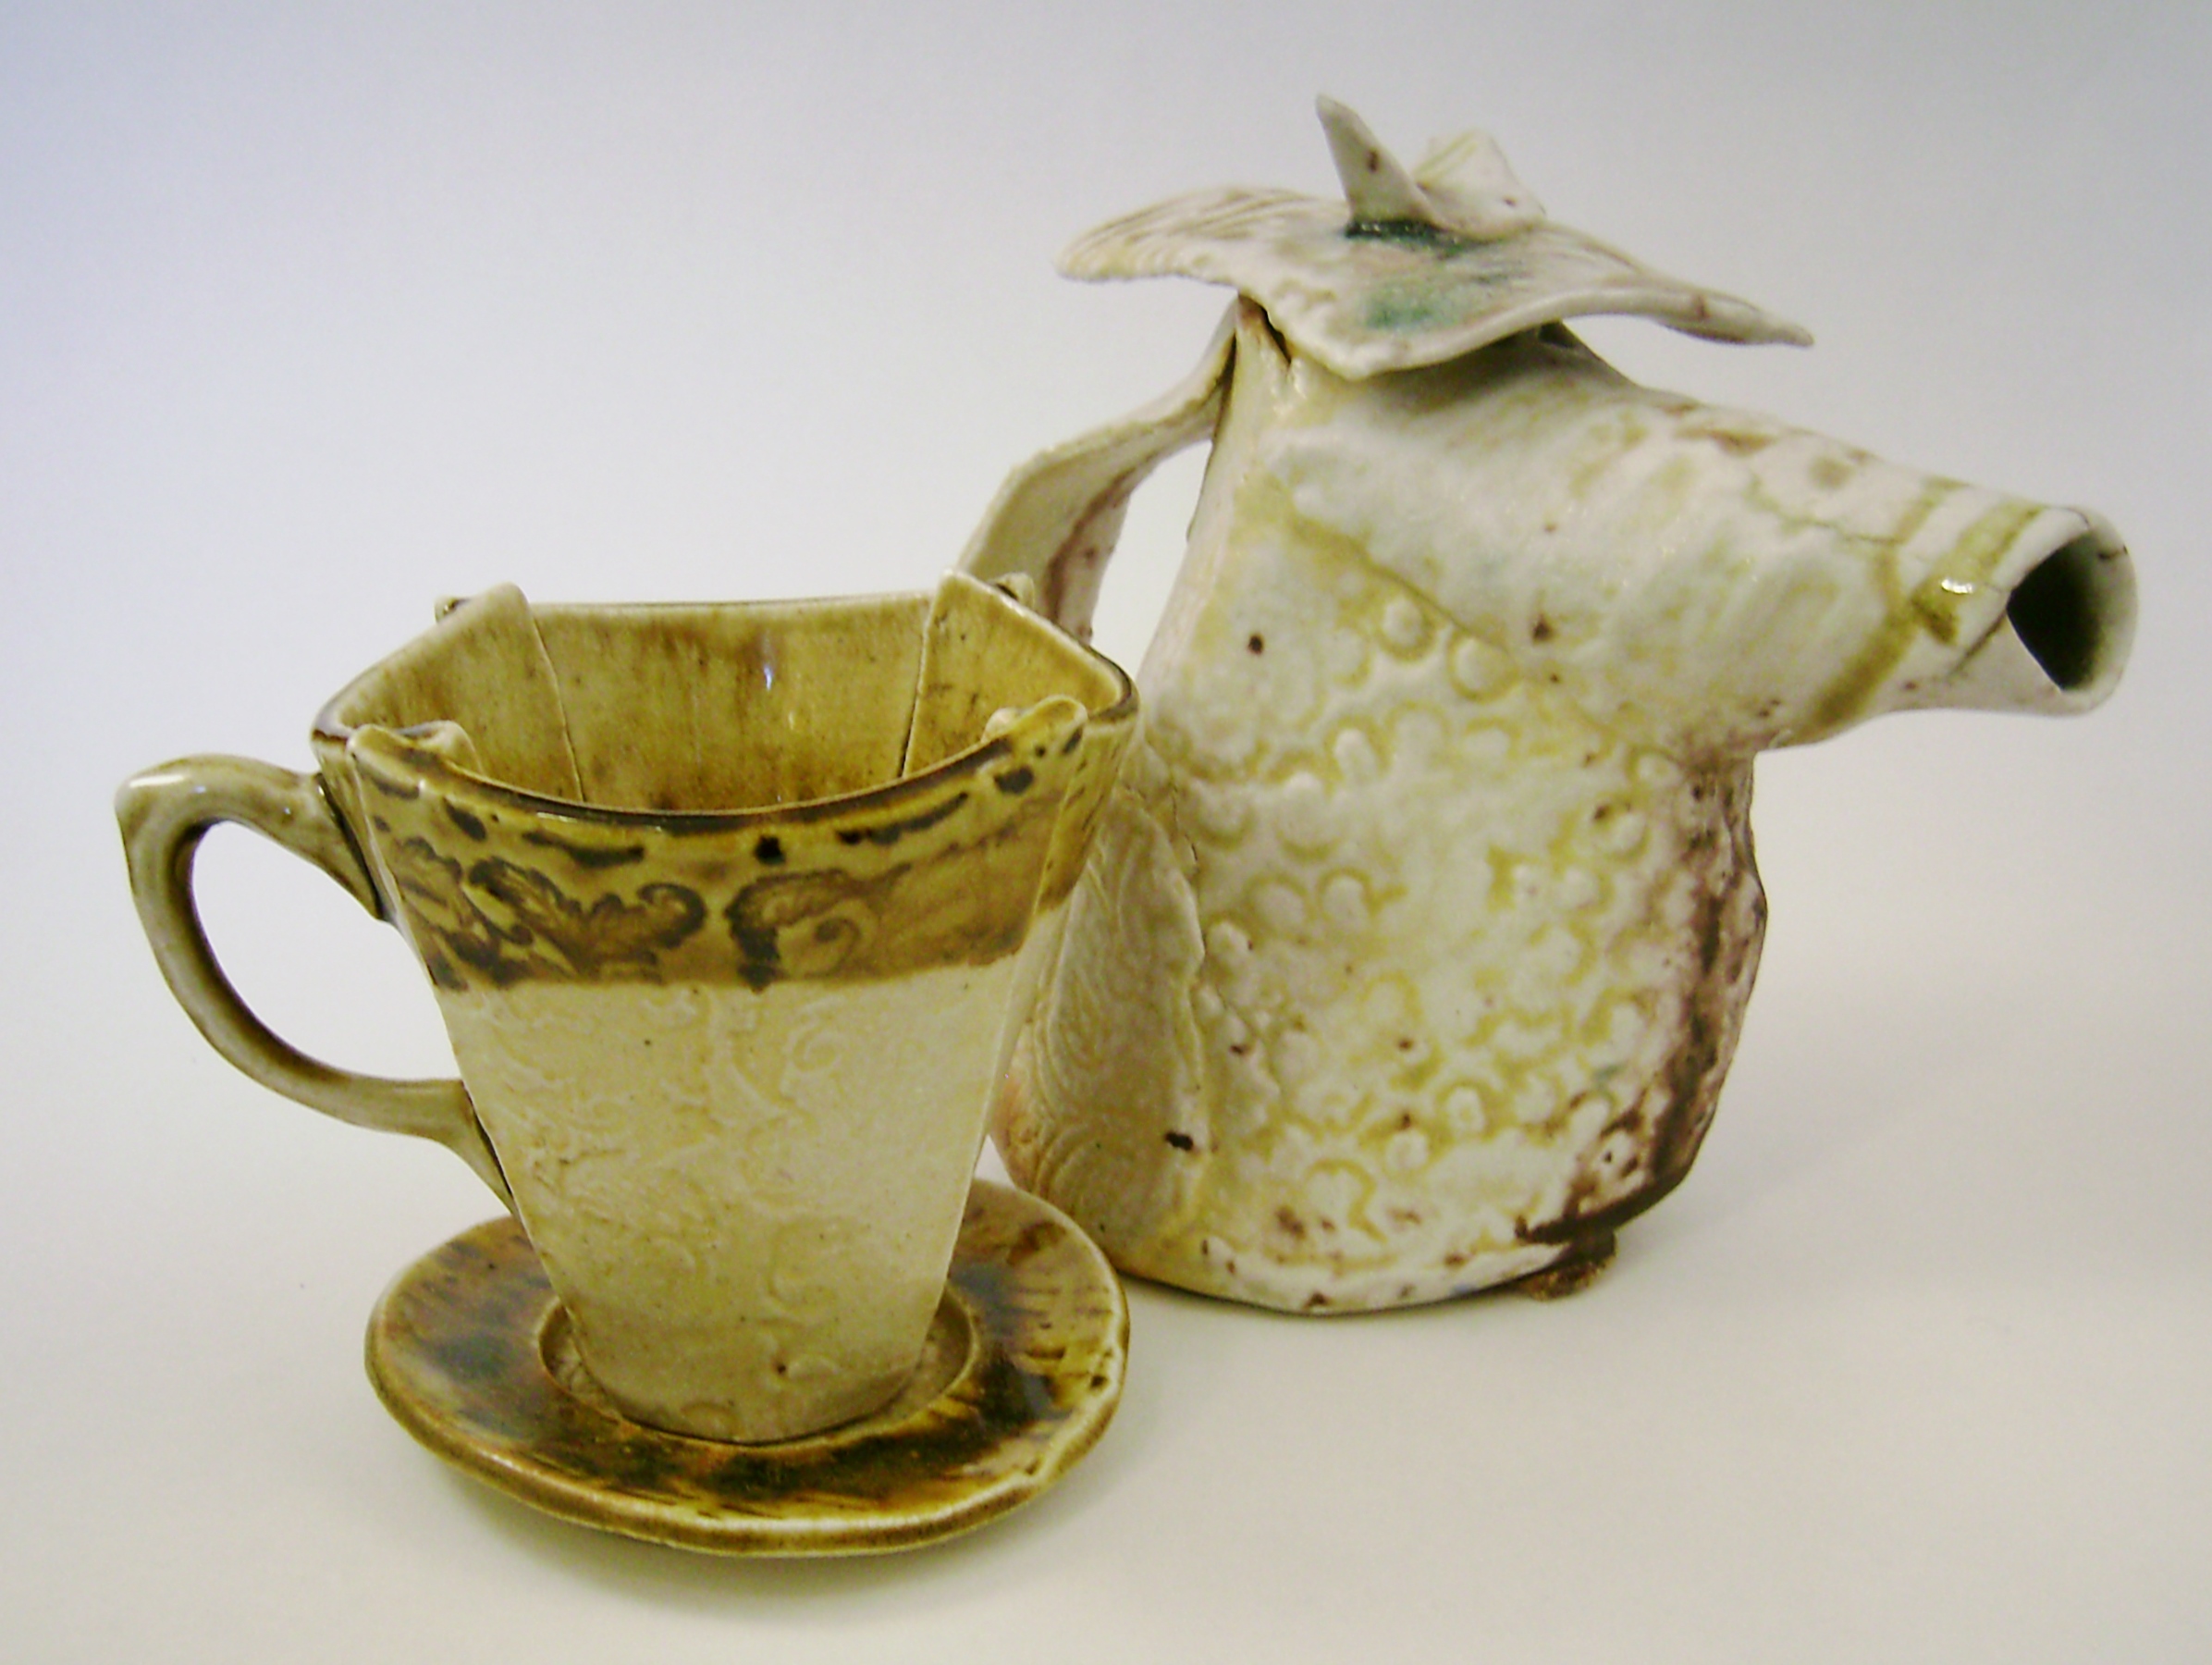 Wonderland teapot and tea cup